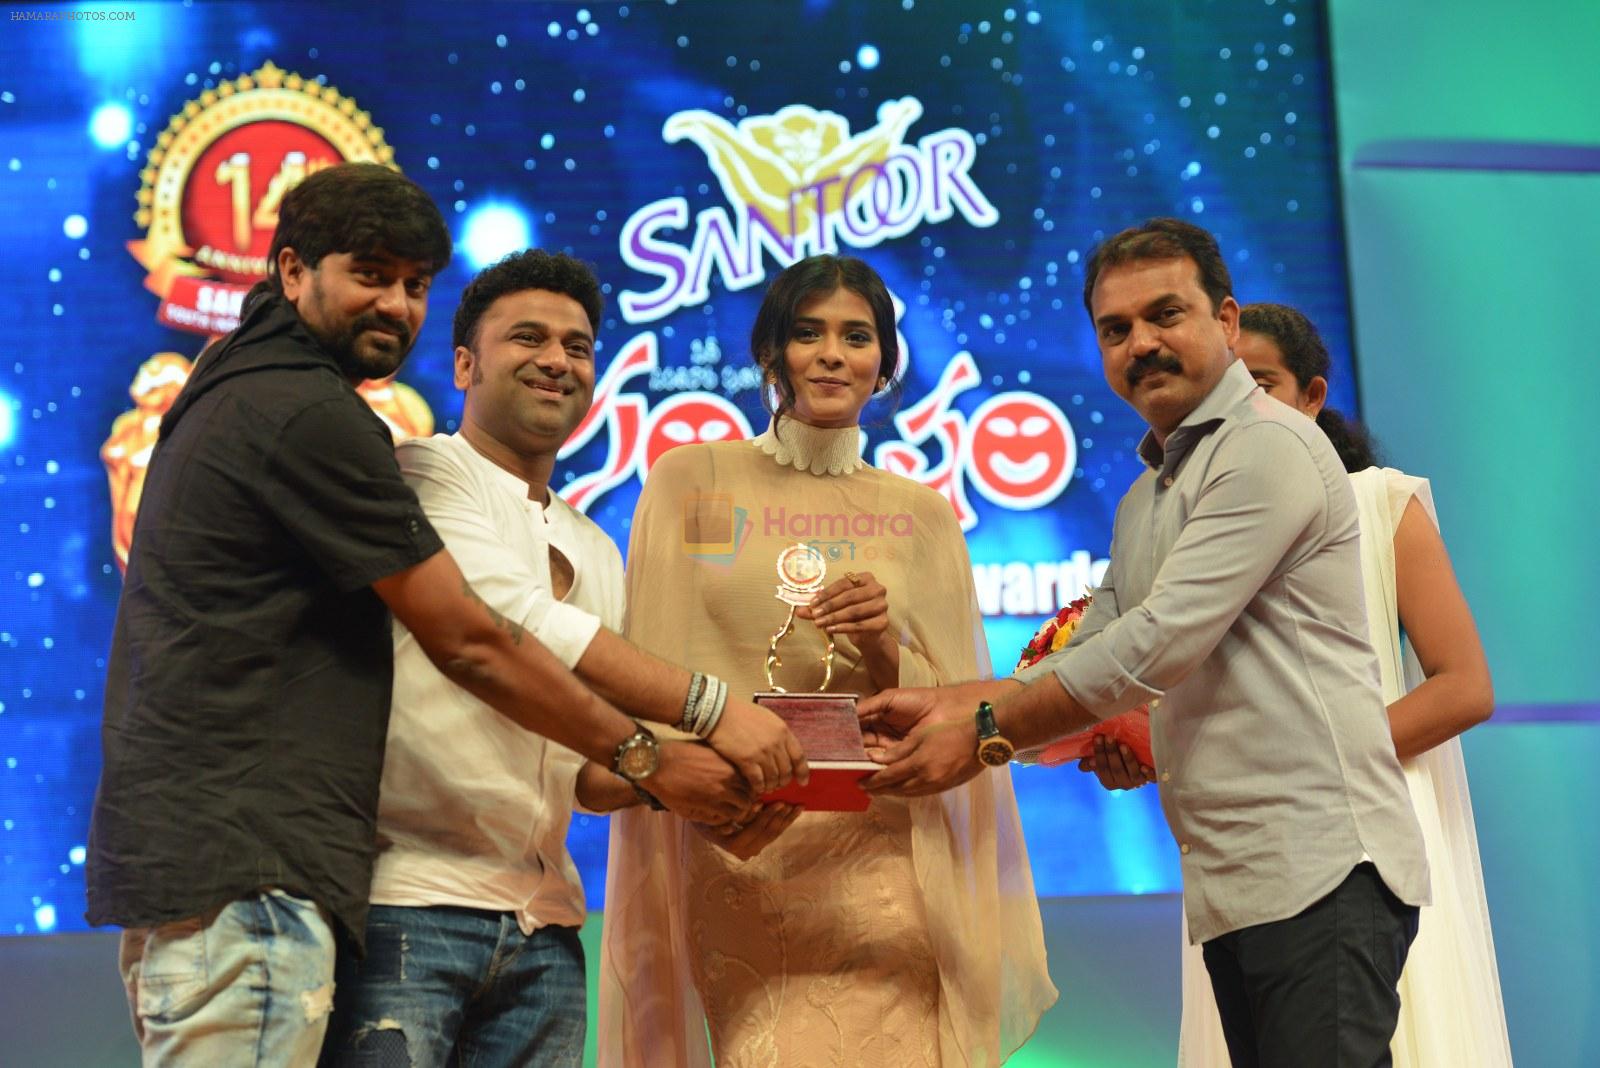 Santosham South India Film Awards 2016 on 15th Aug 2016